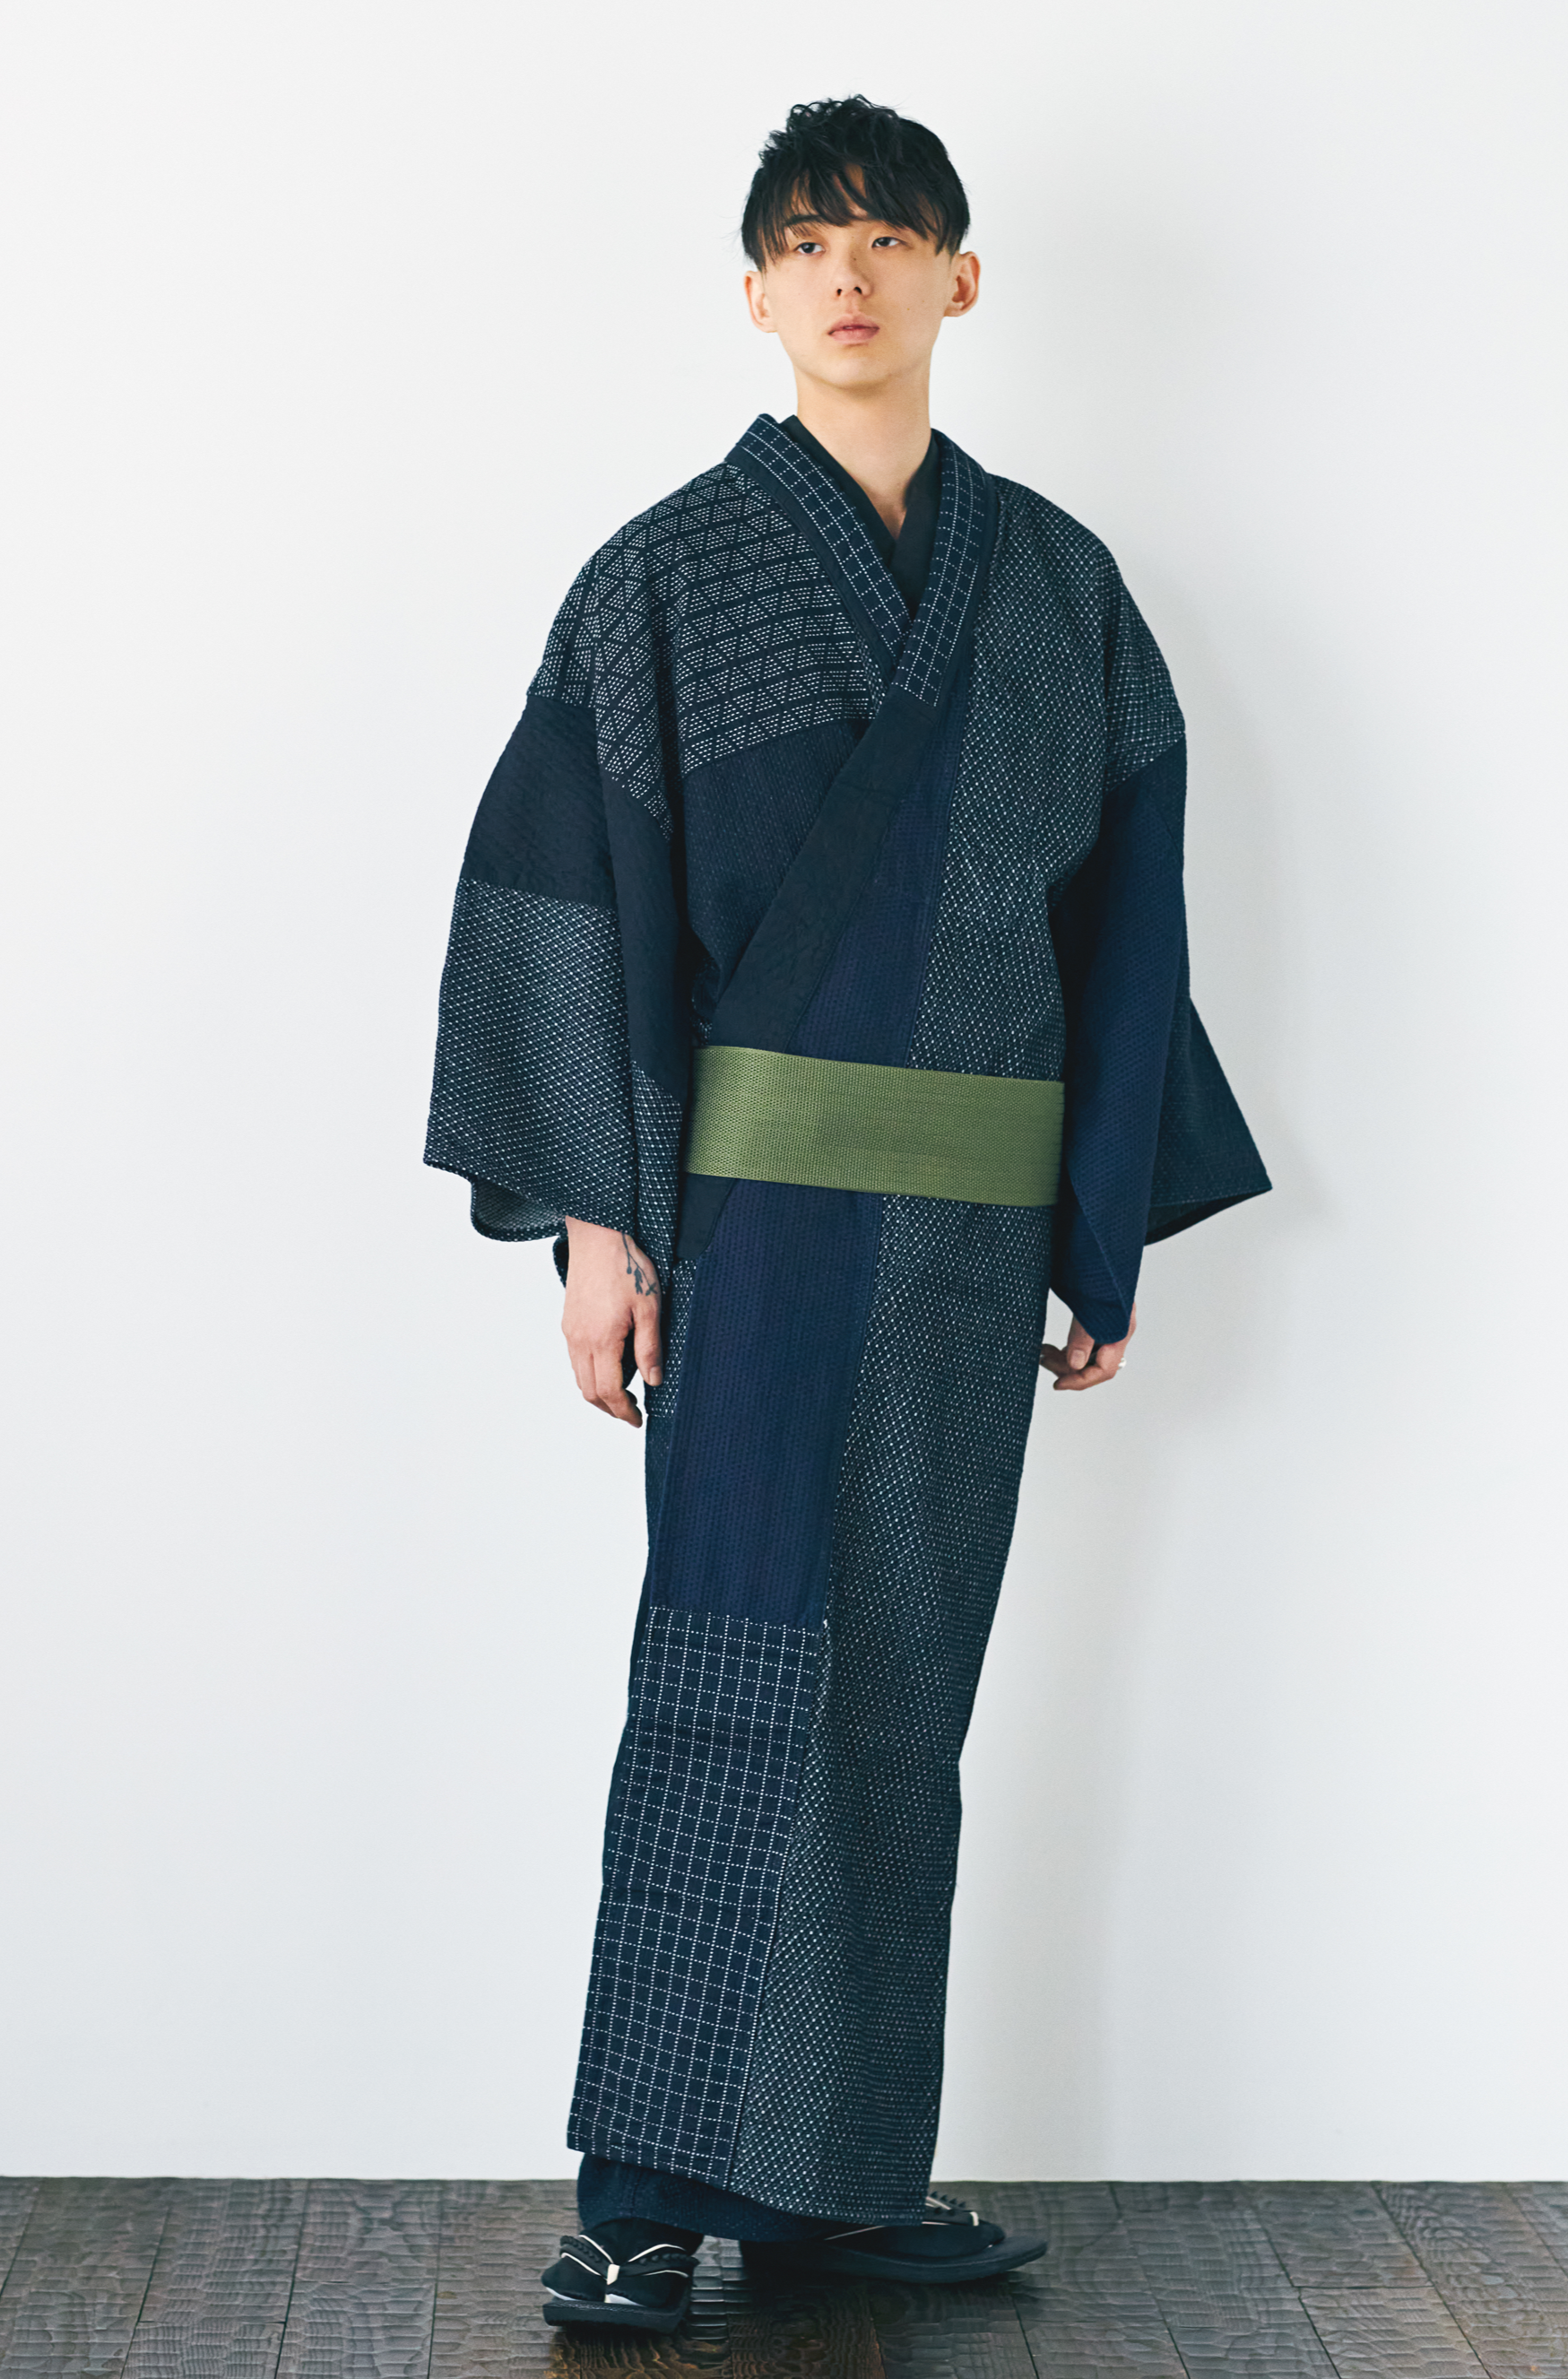 KAPUKI original denim kimono BORO patchwork men's indigo